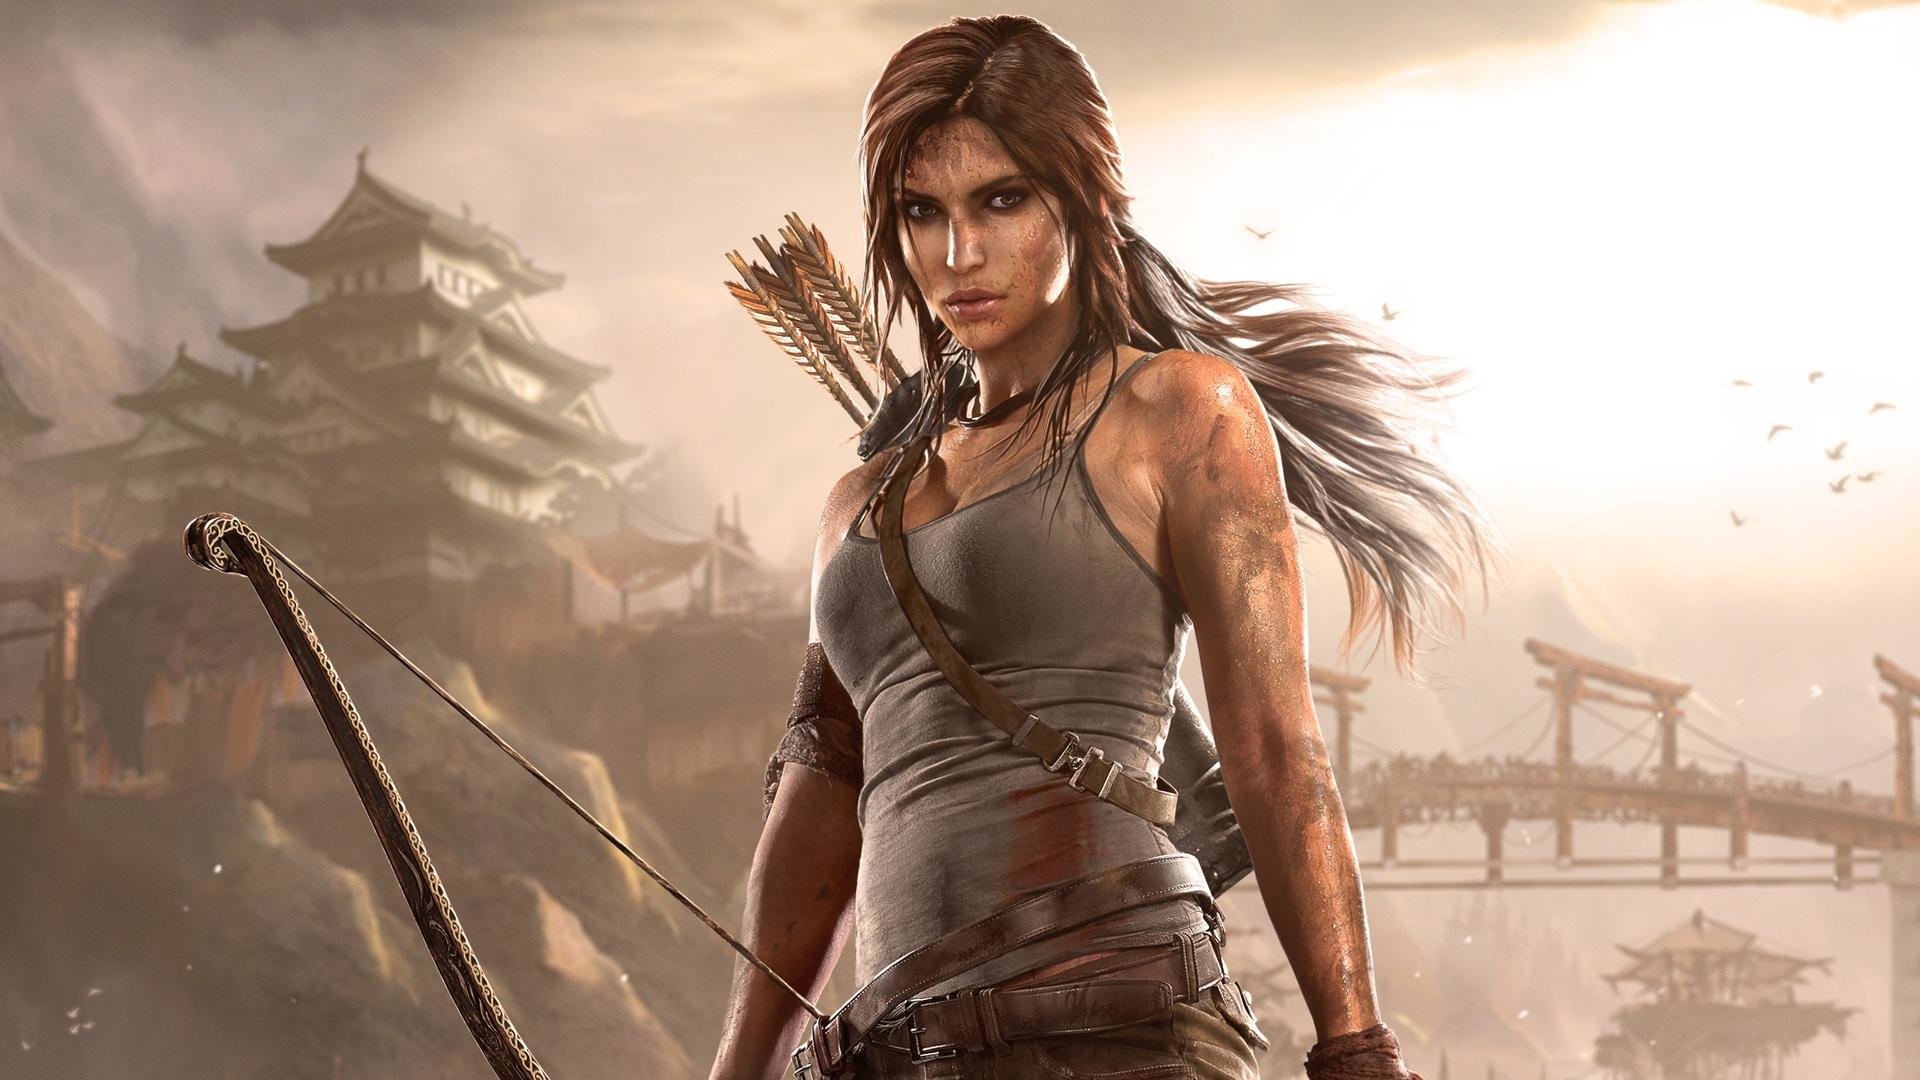 Best Tomb Raider (Lara Croft) background ID:437286 for High Resolution hd 1920x1080 PC